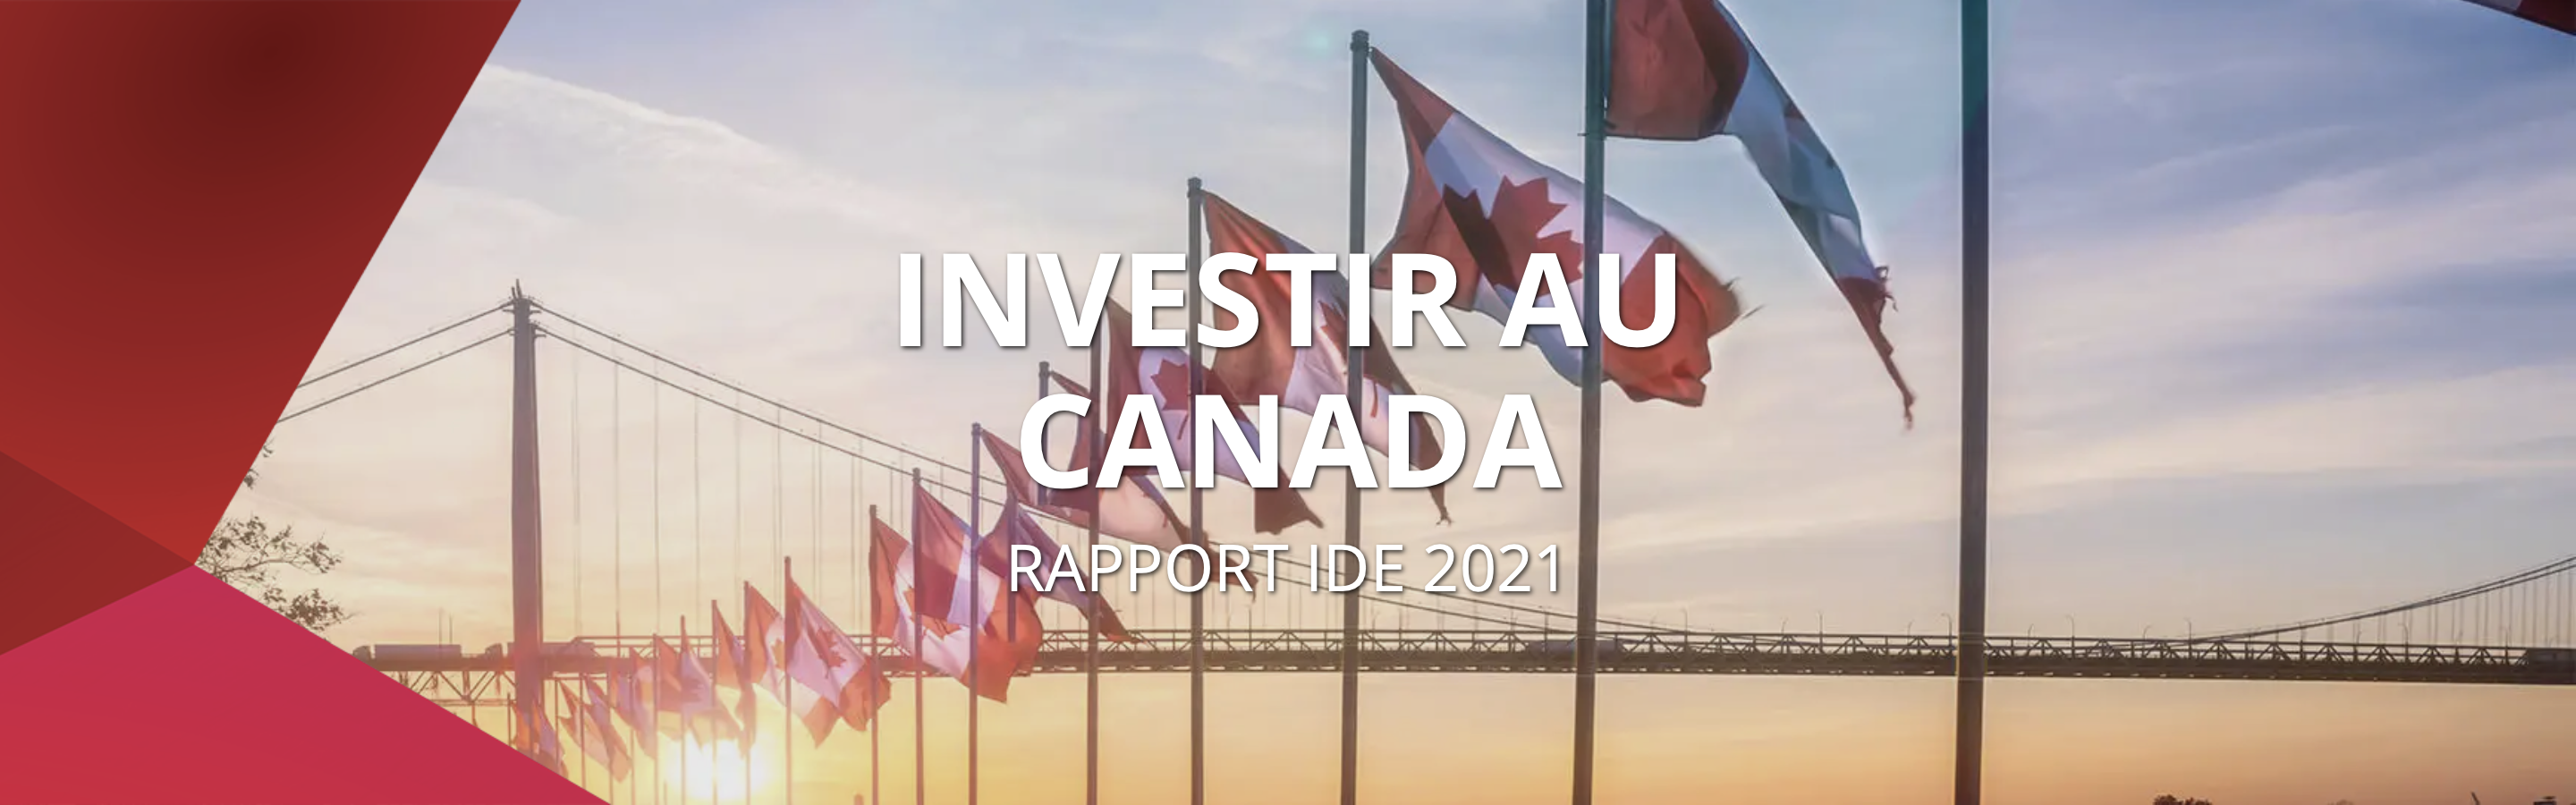 Investir au Canada - IDE en 2021